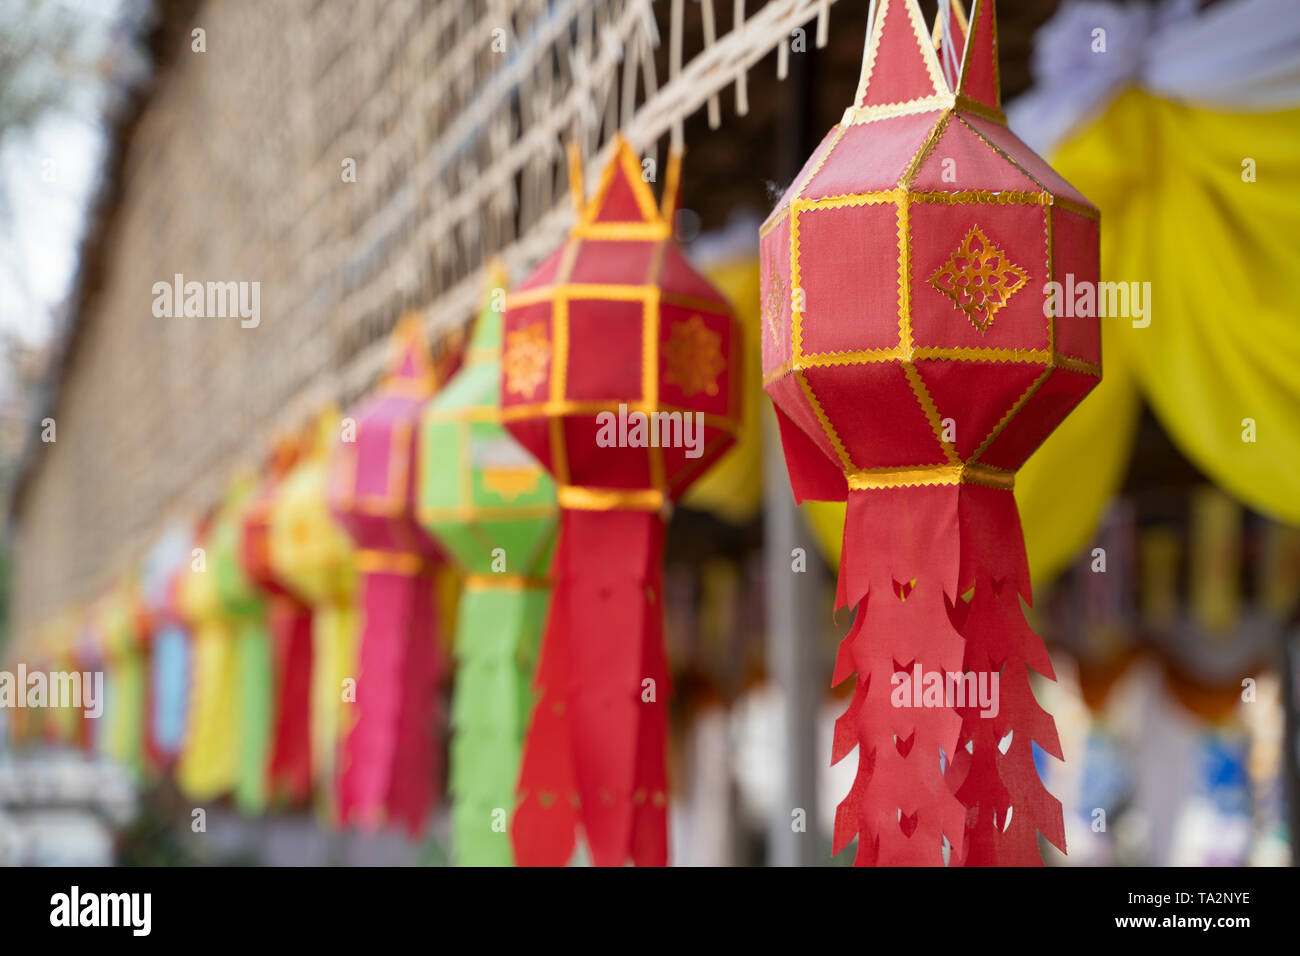 Stile Lanna lampade in Thailandia - Immagine Foto Stock